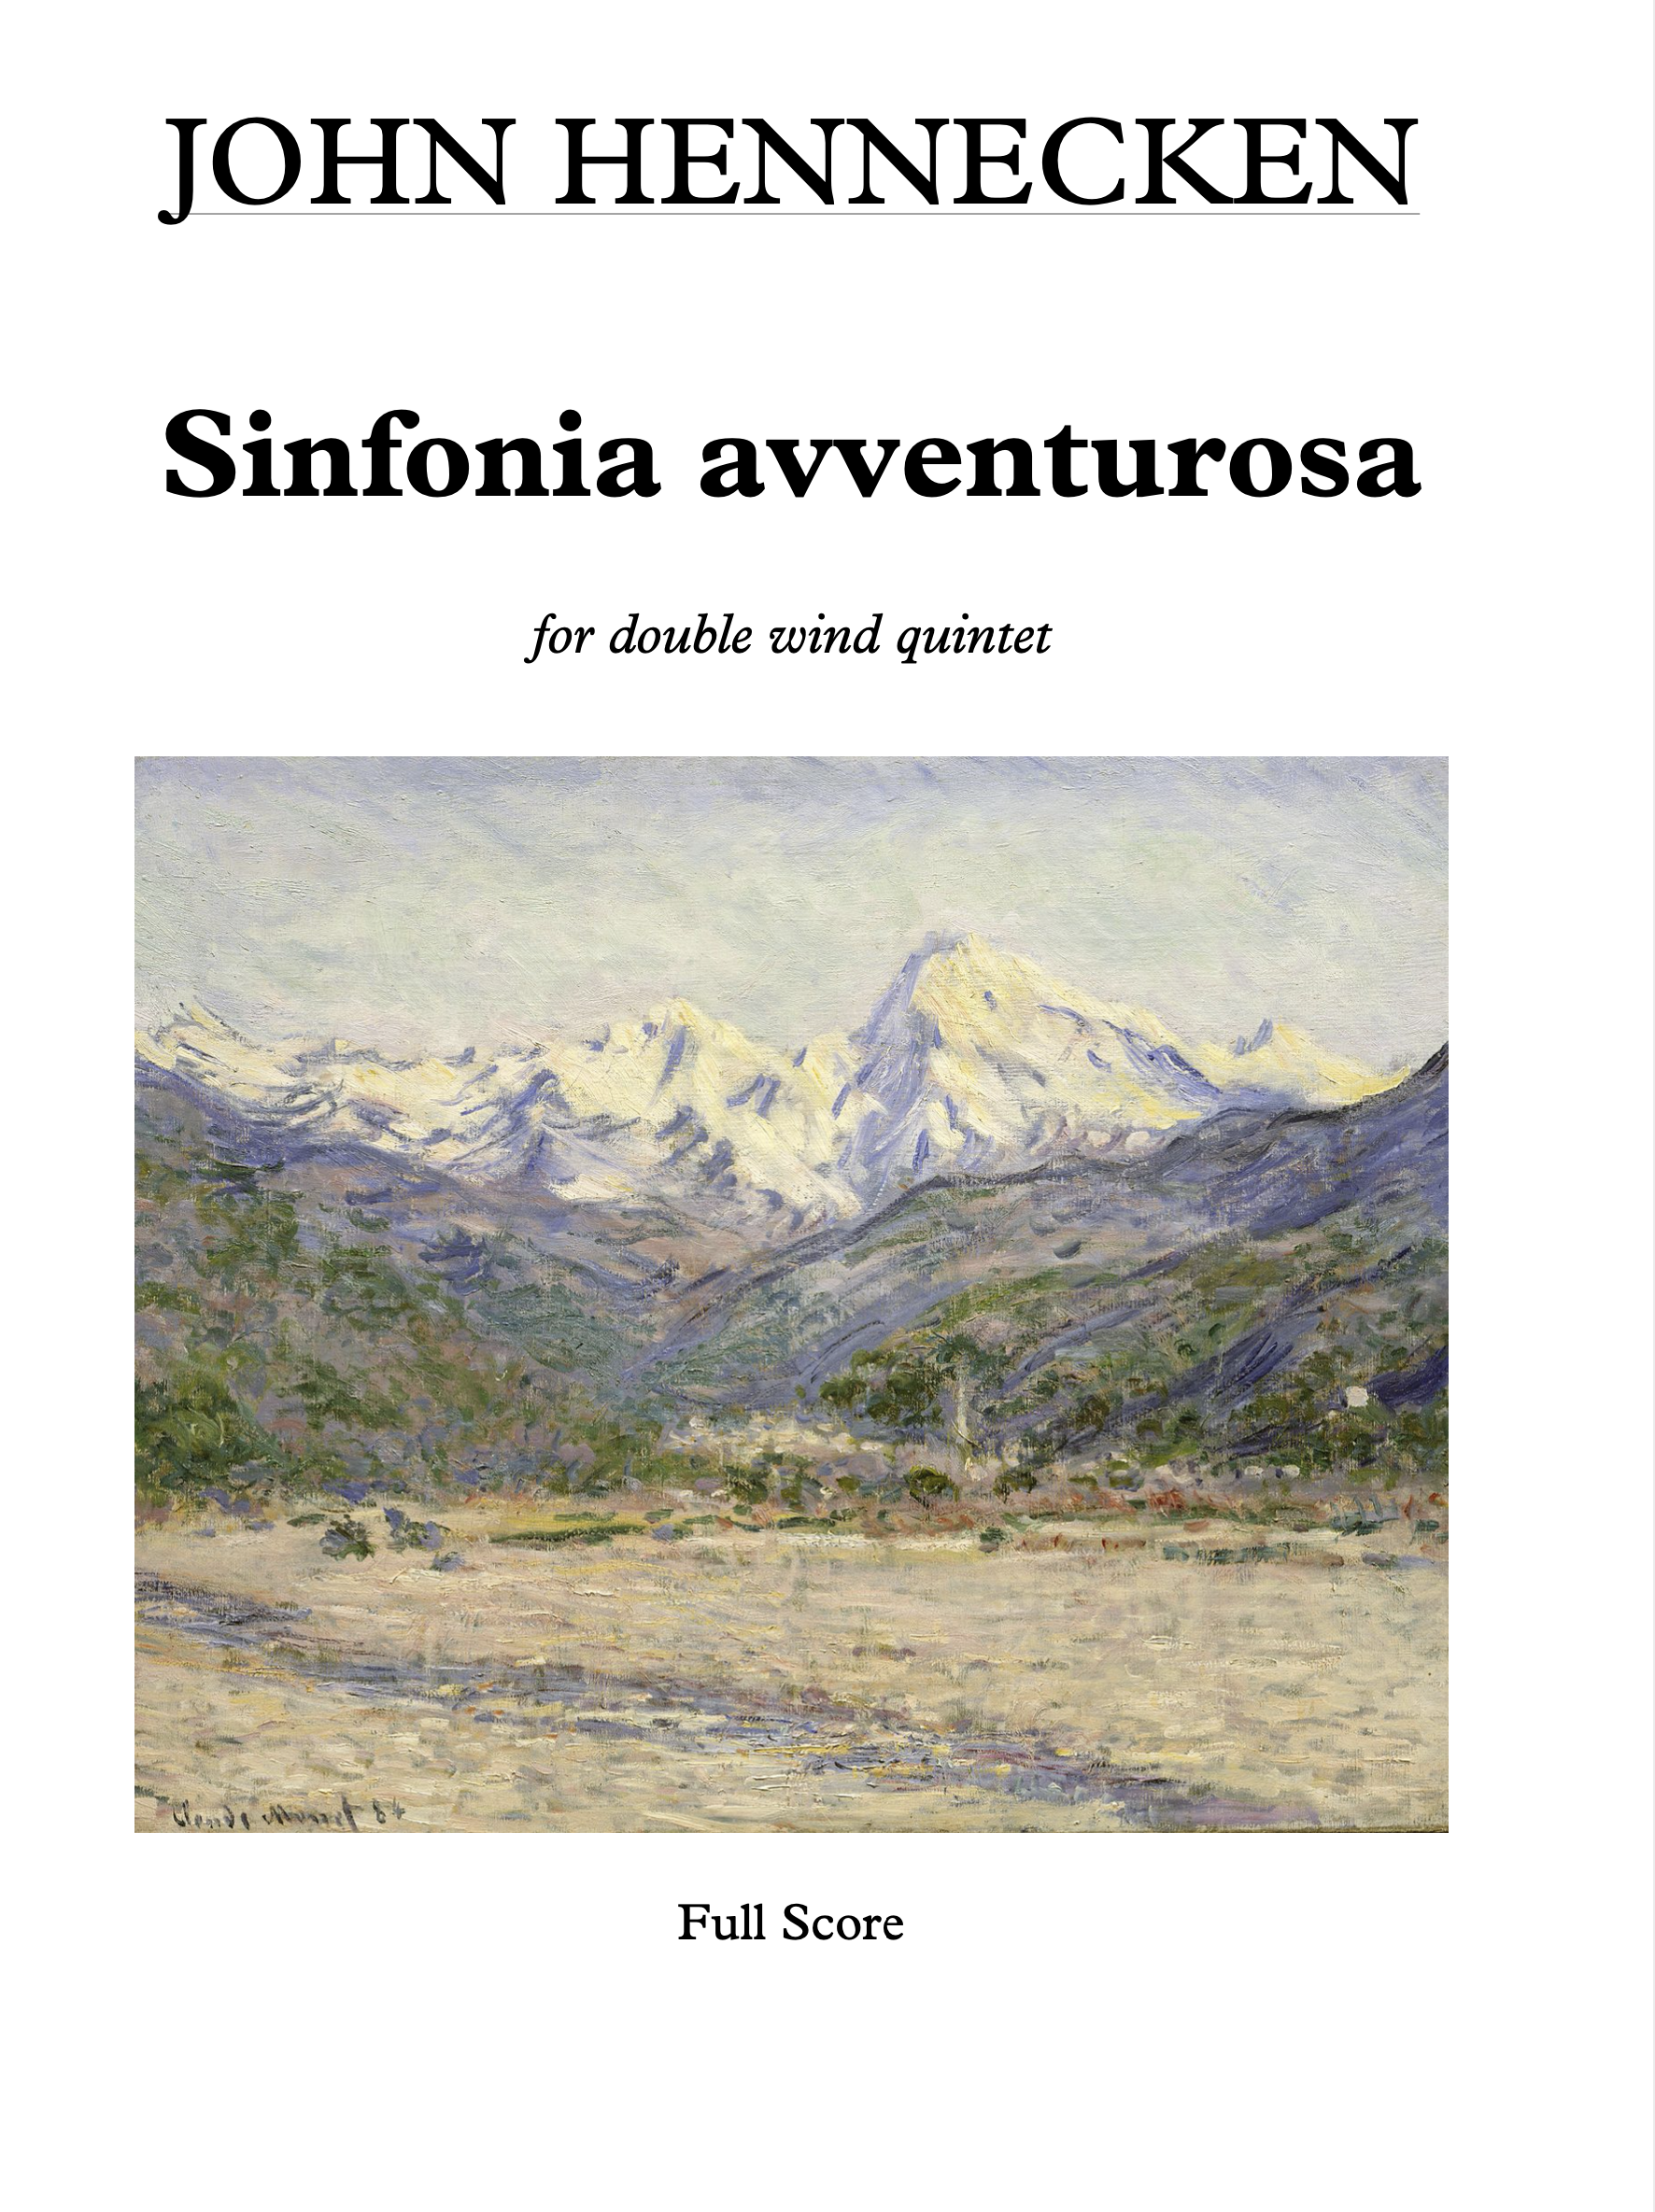 Sinfonia Avventurosa by John Hennecken